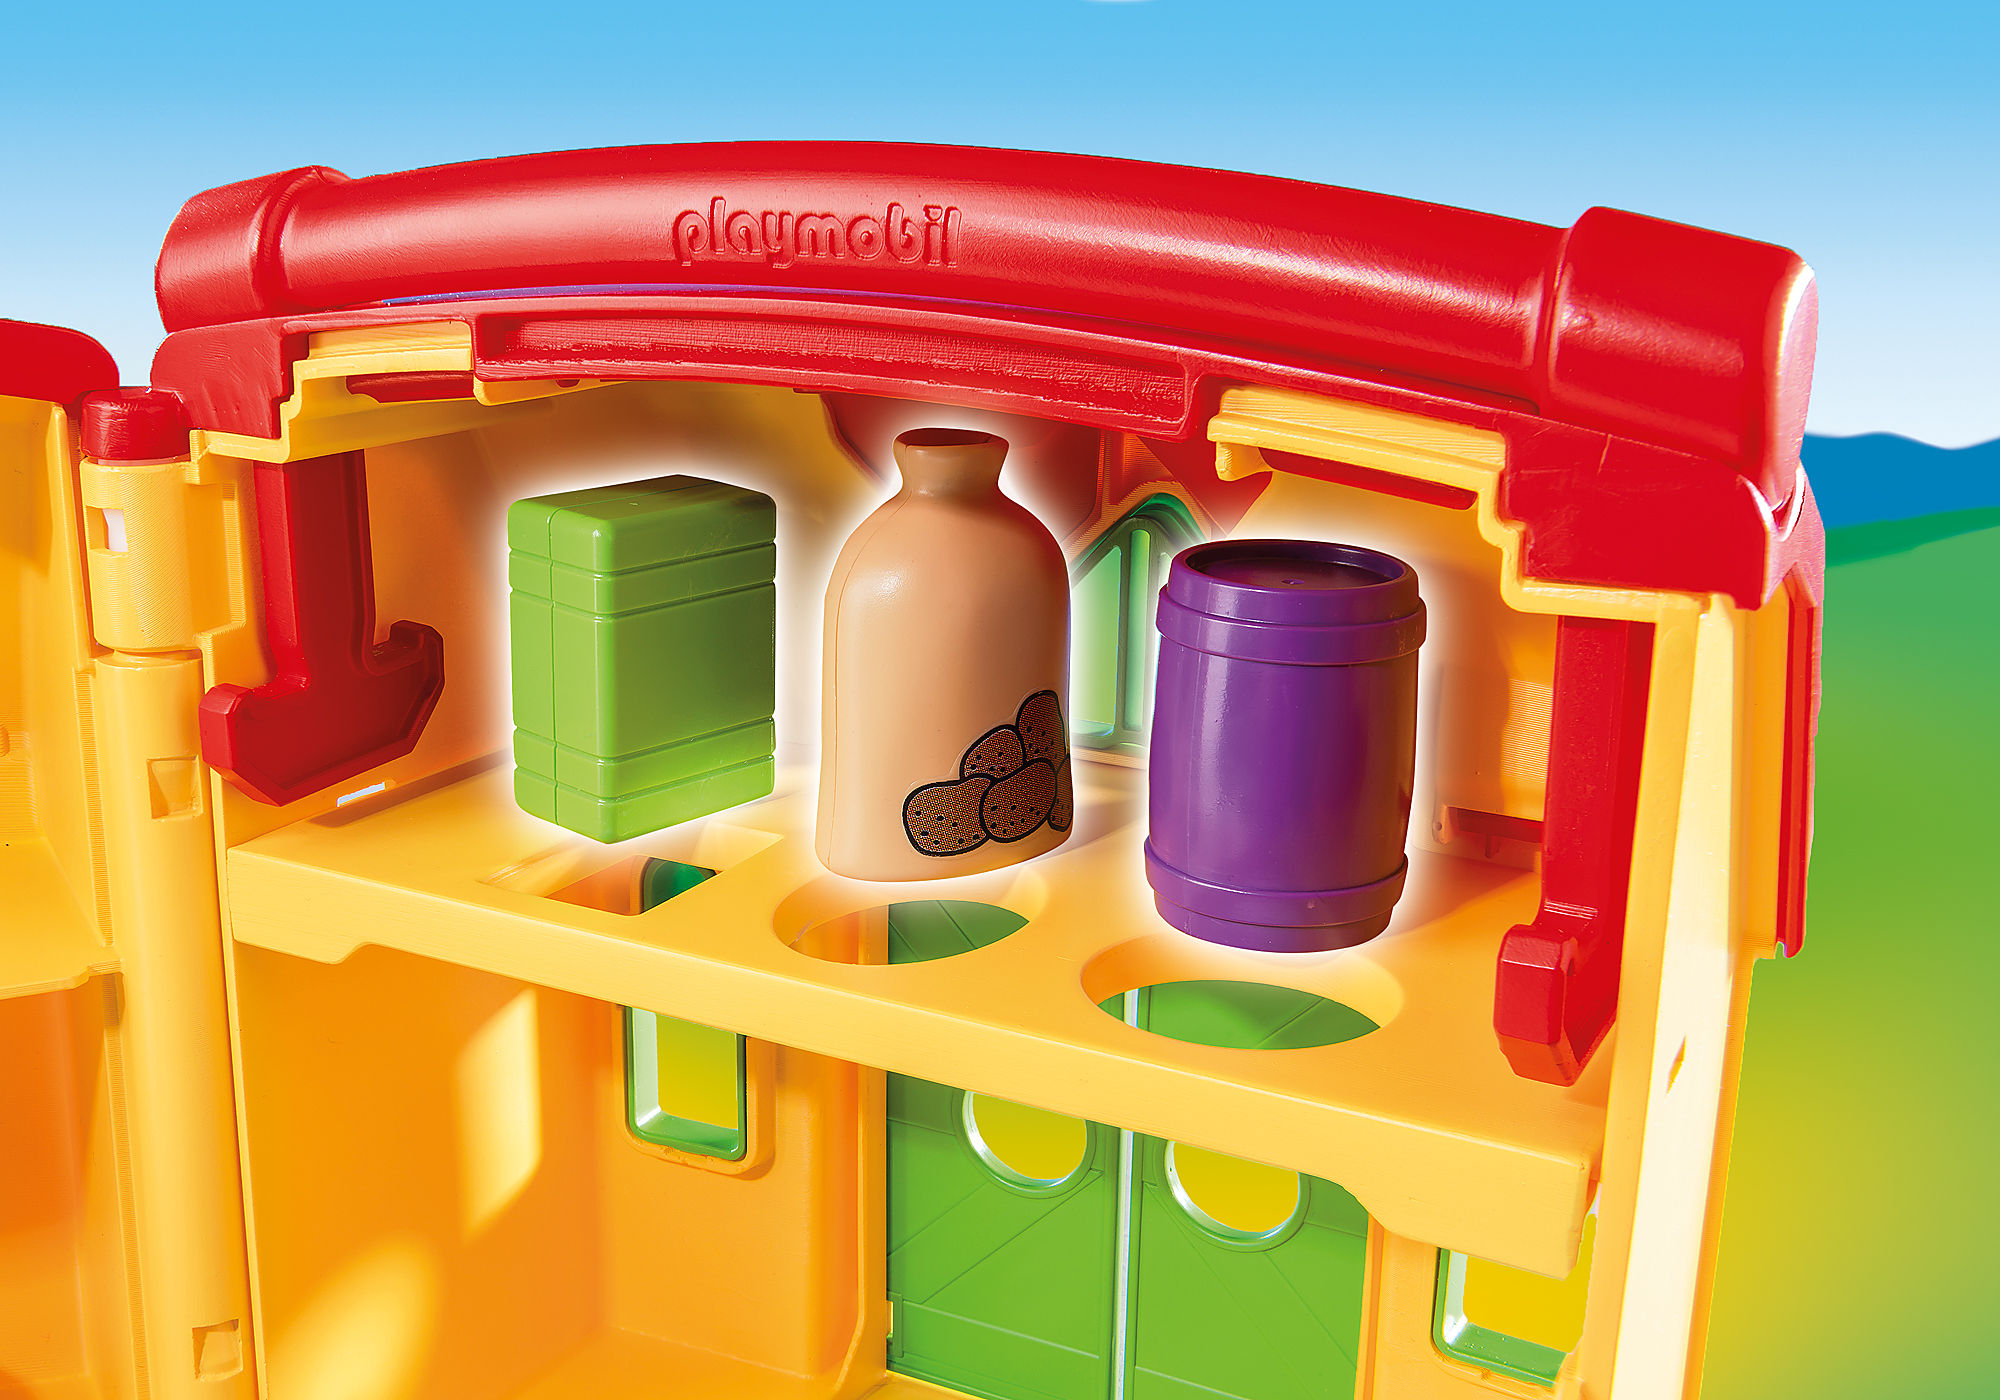 Ferme Transportable Playmobil 123 pas cher - Achat neuf et occasion